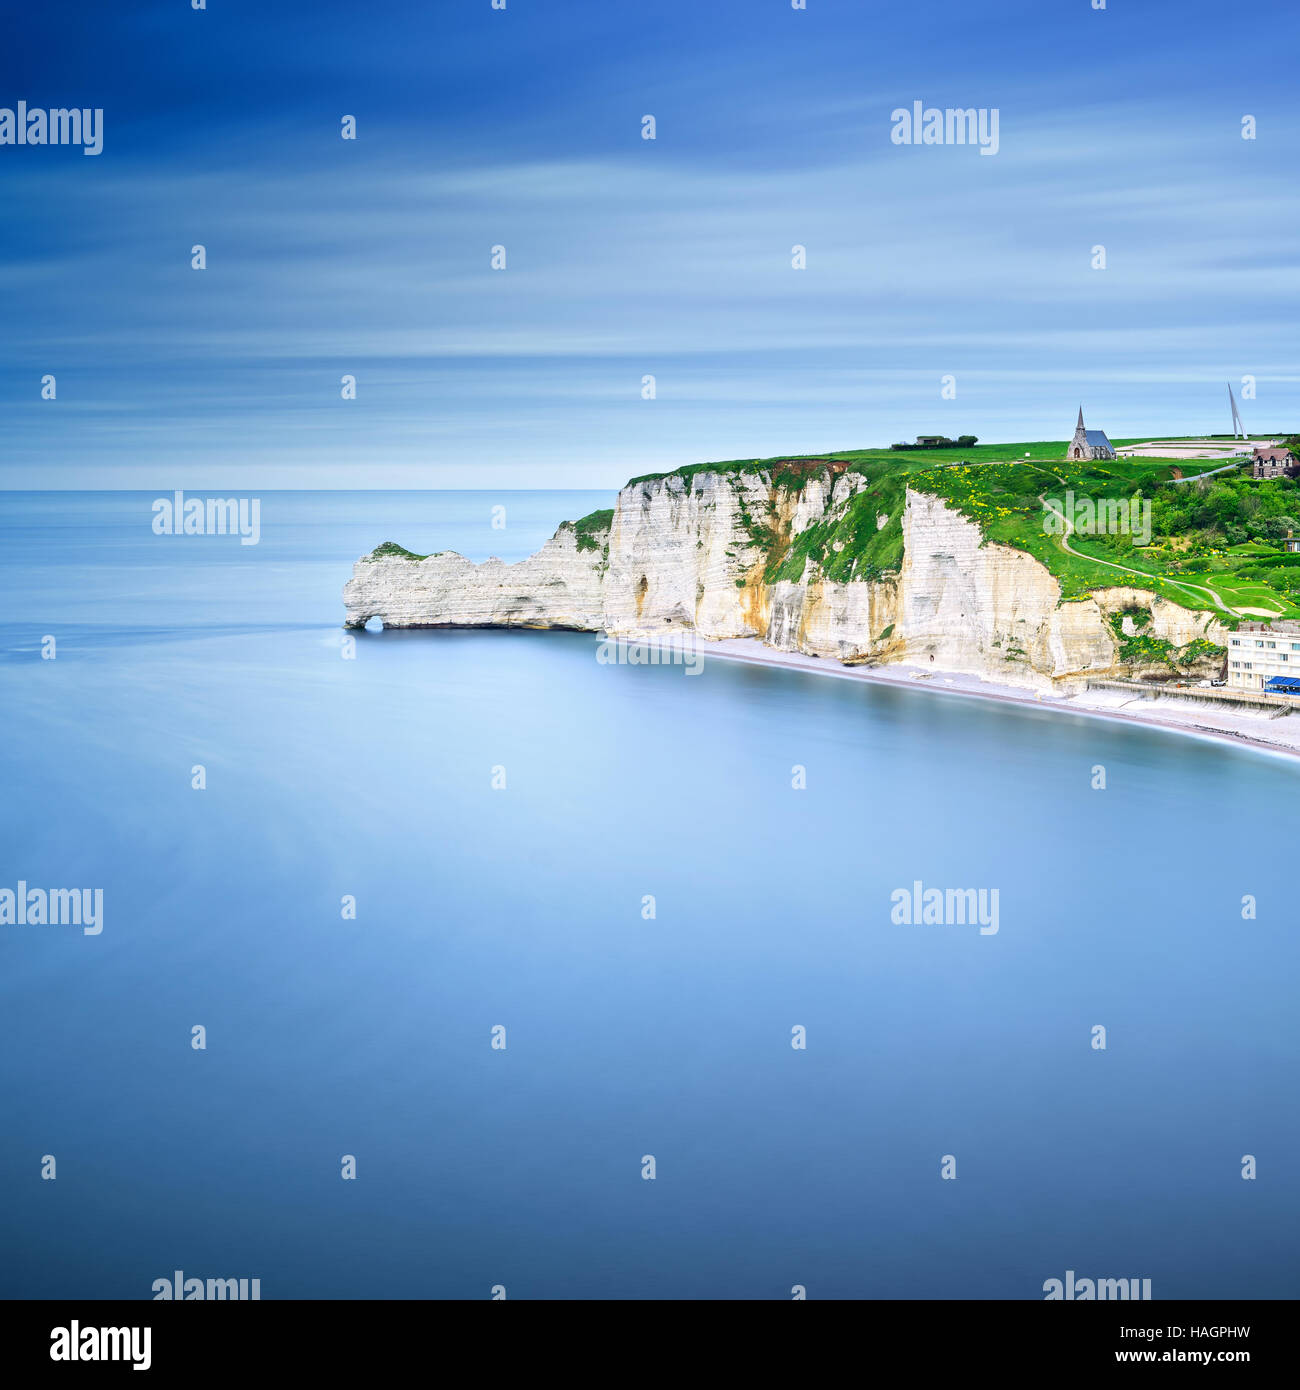 Etretat acantilados, rocas, arco natural landmark y océano azul. Vista aérea. Normandía, Francia, Europa. Foto de stock